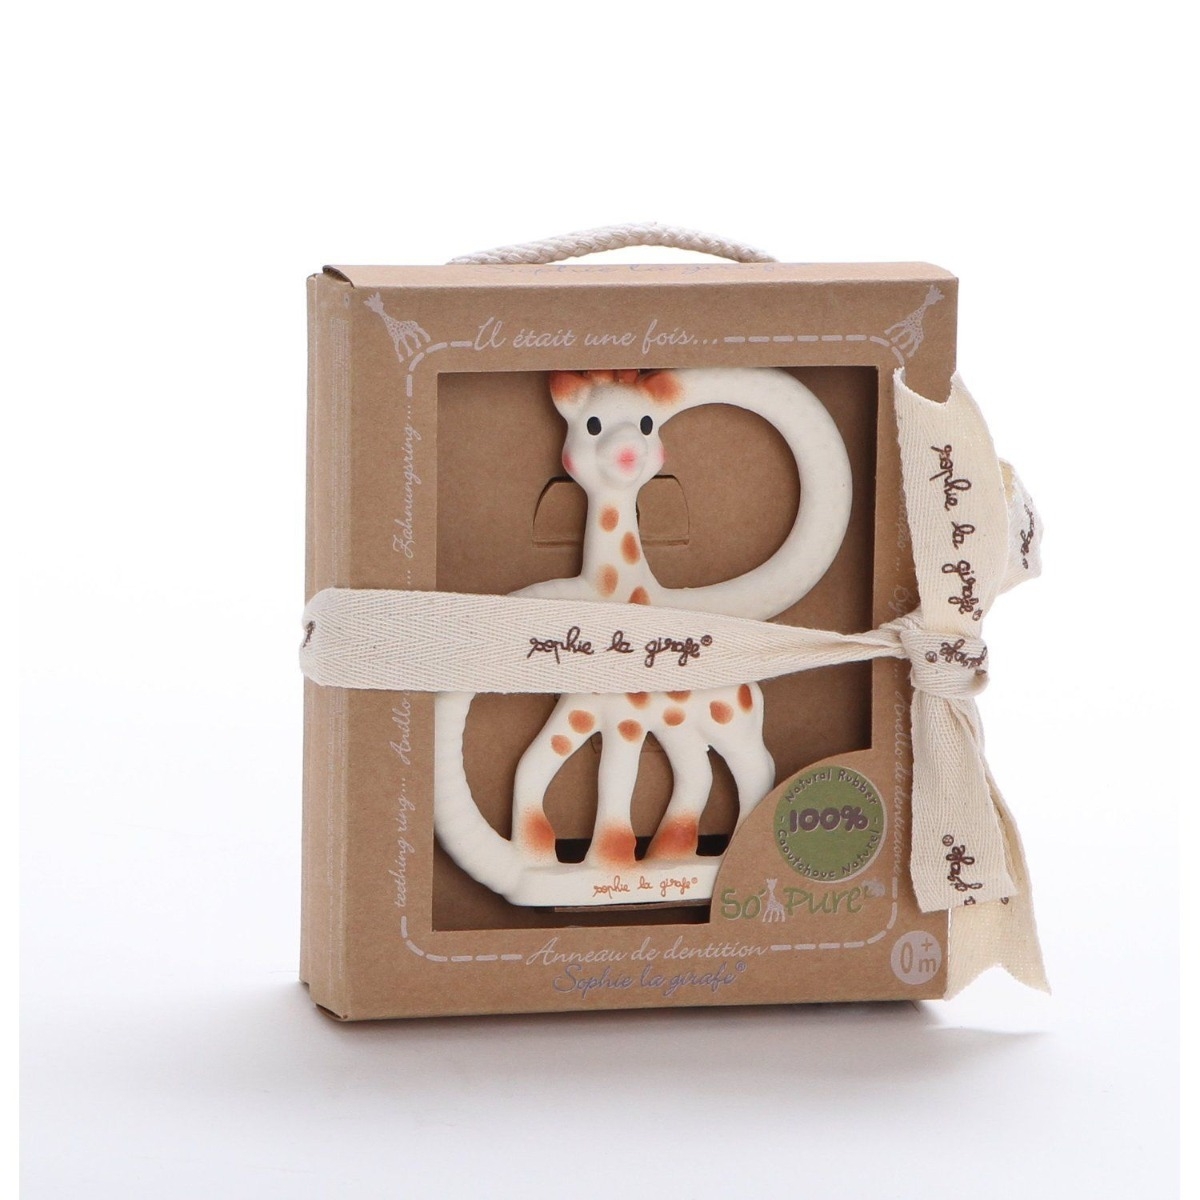 Sophie The Giraffe Teether Ring – Brown / White – Bpa Free Plastic